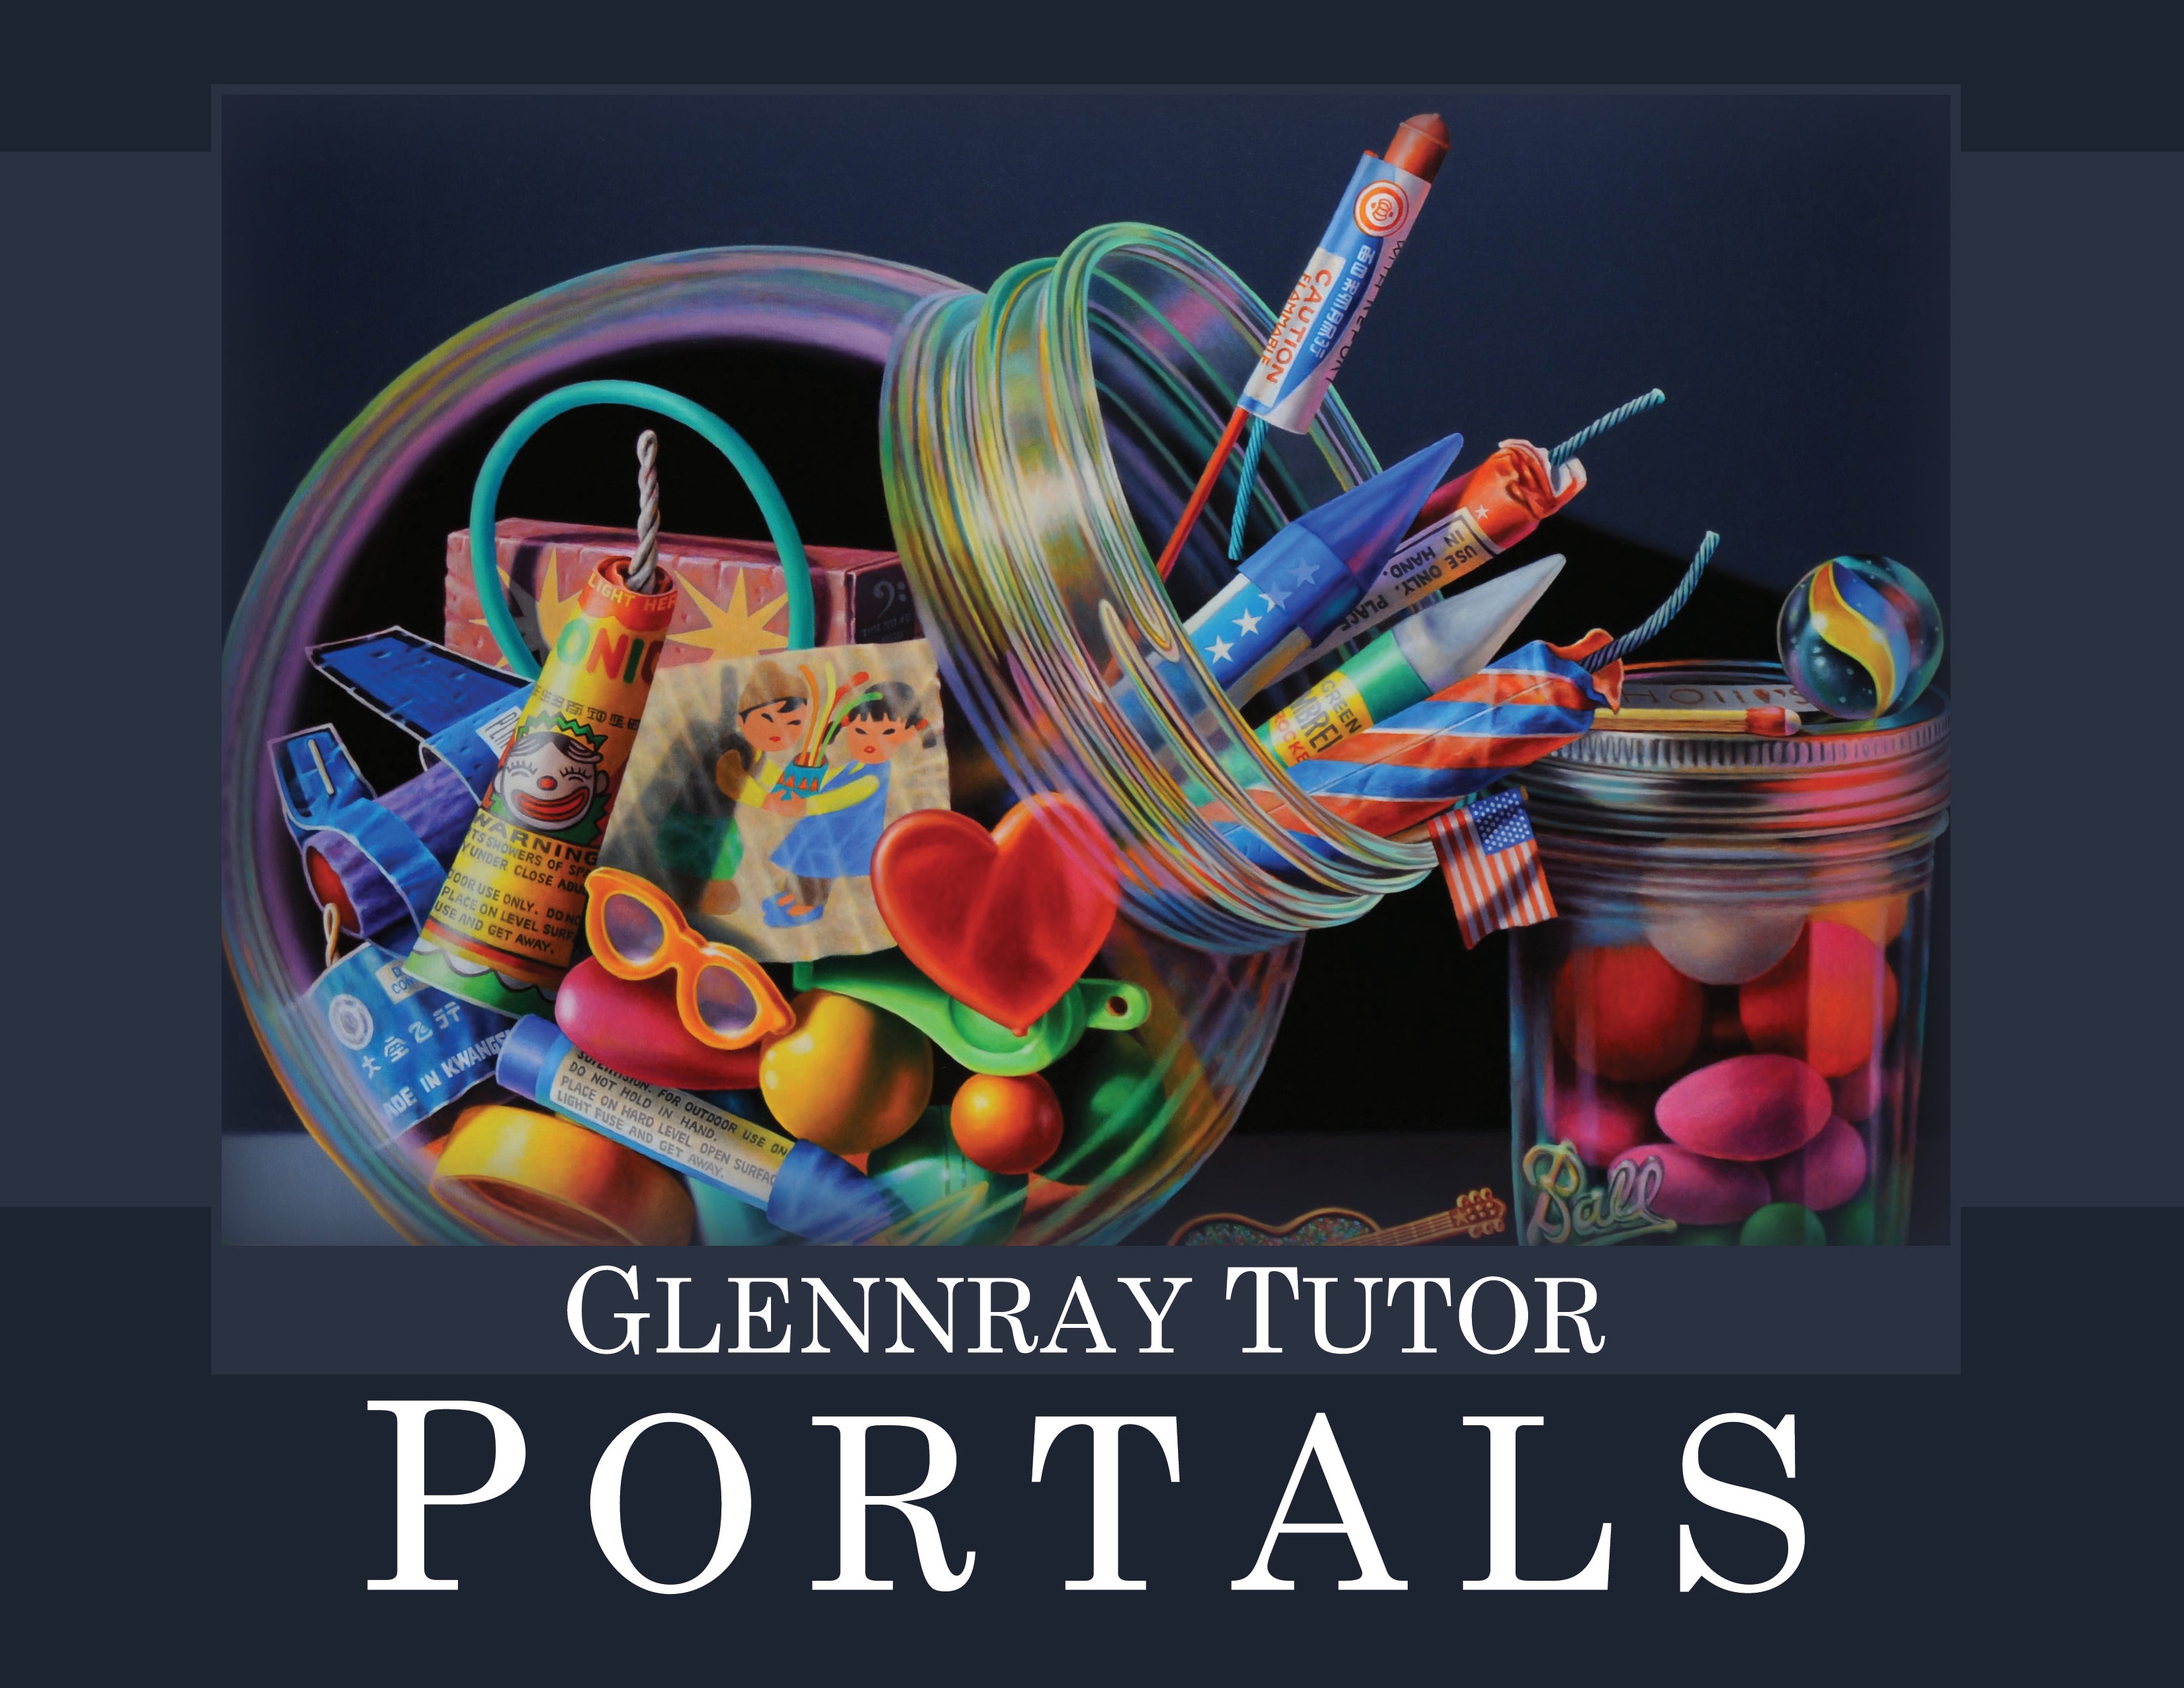 Glennray Tutor's "Portals" Artwork Coffee Table Book